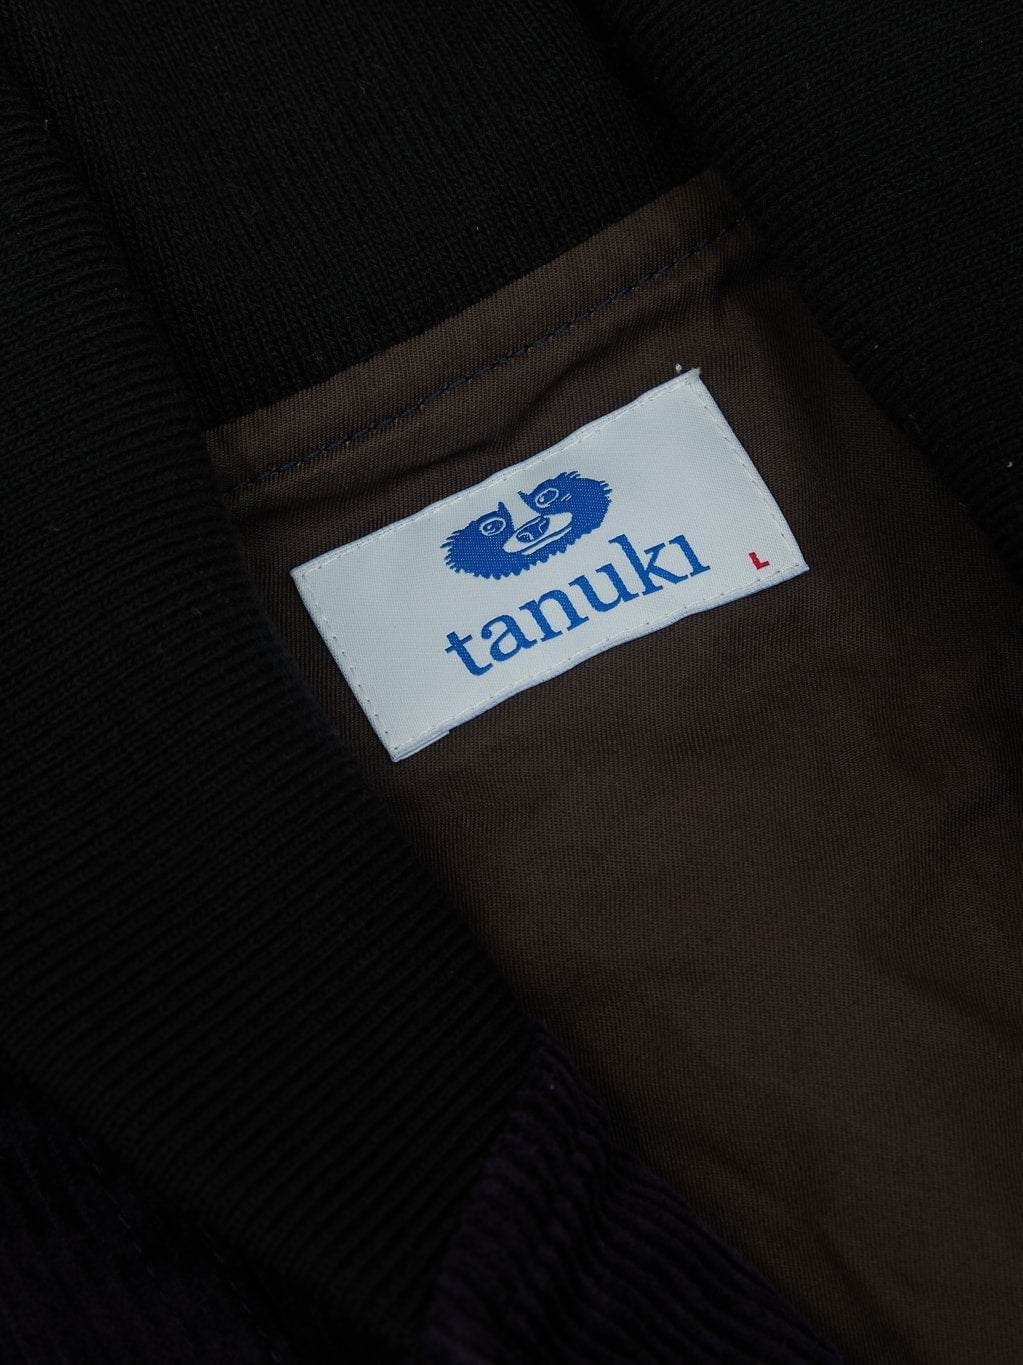 Tanuki Sazanami Corduroy natural indigo dyed Jacket  ventile lining fabric